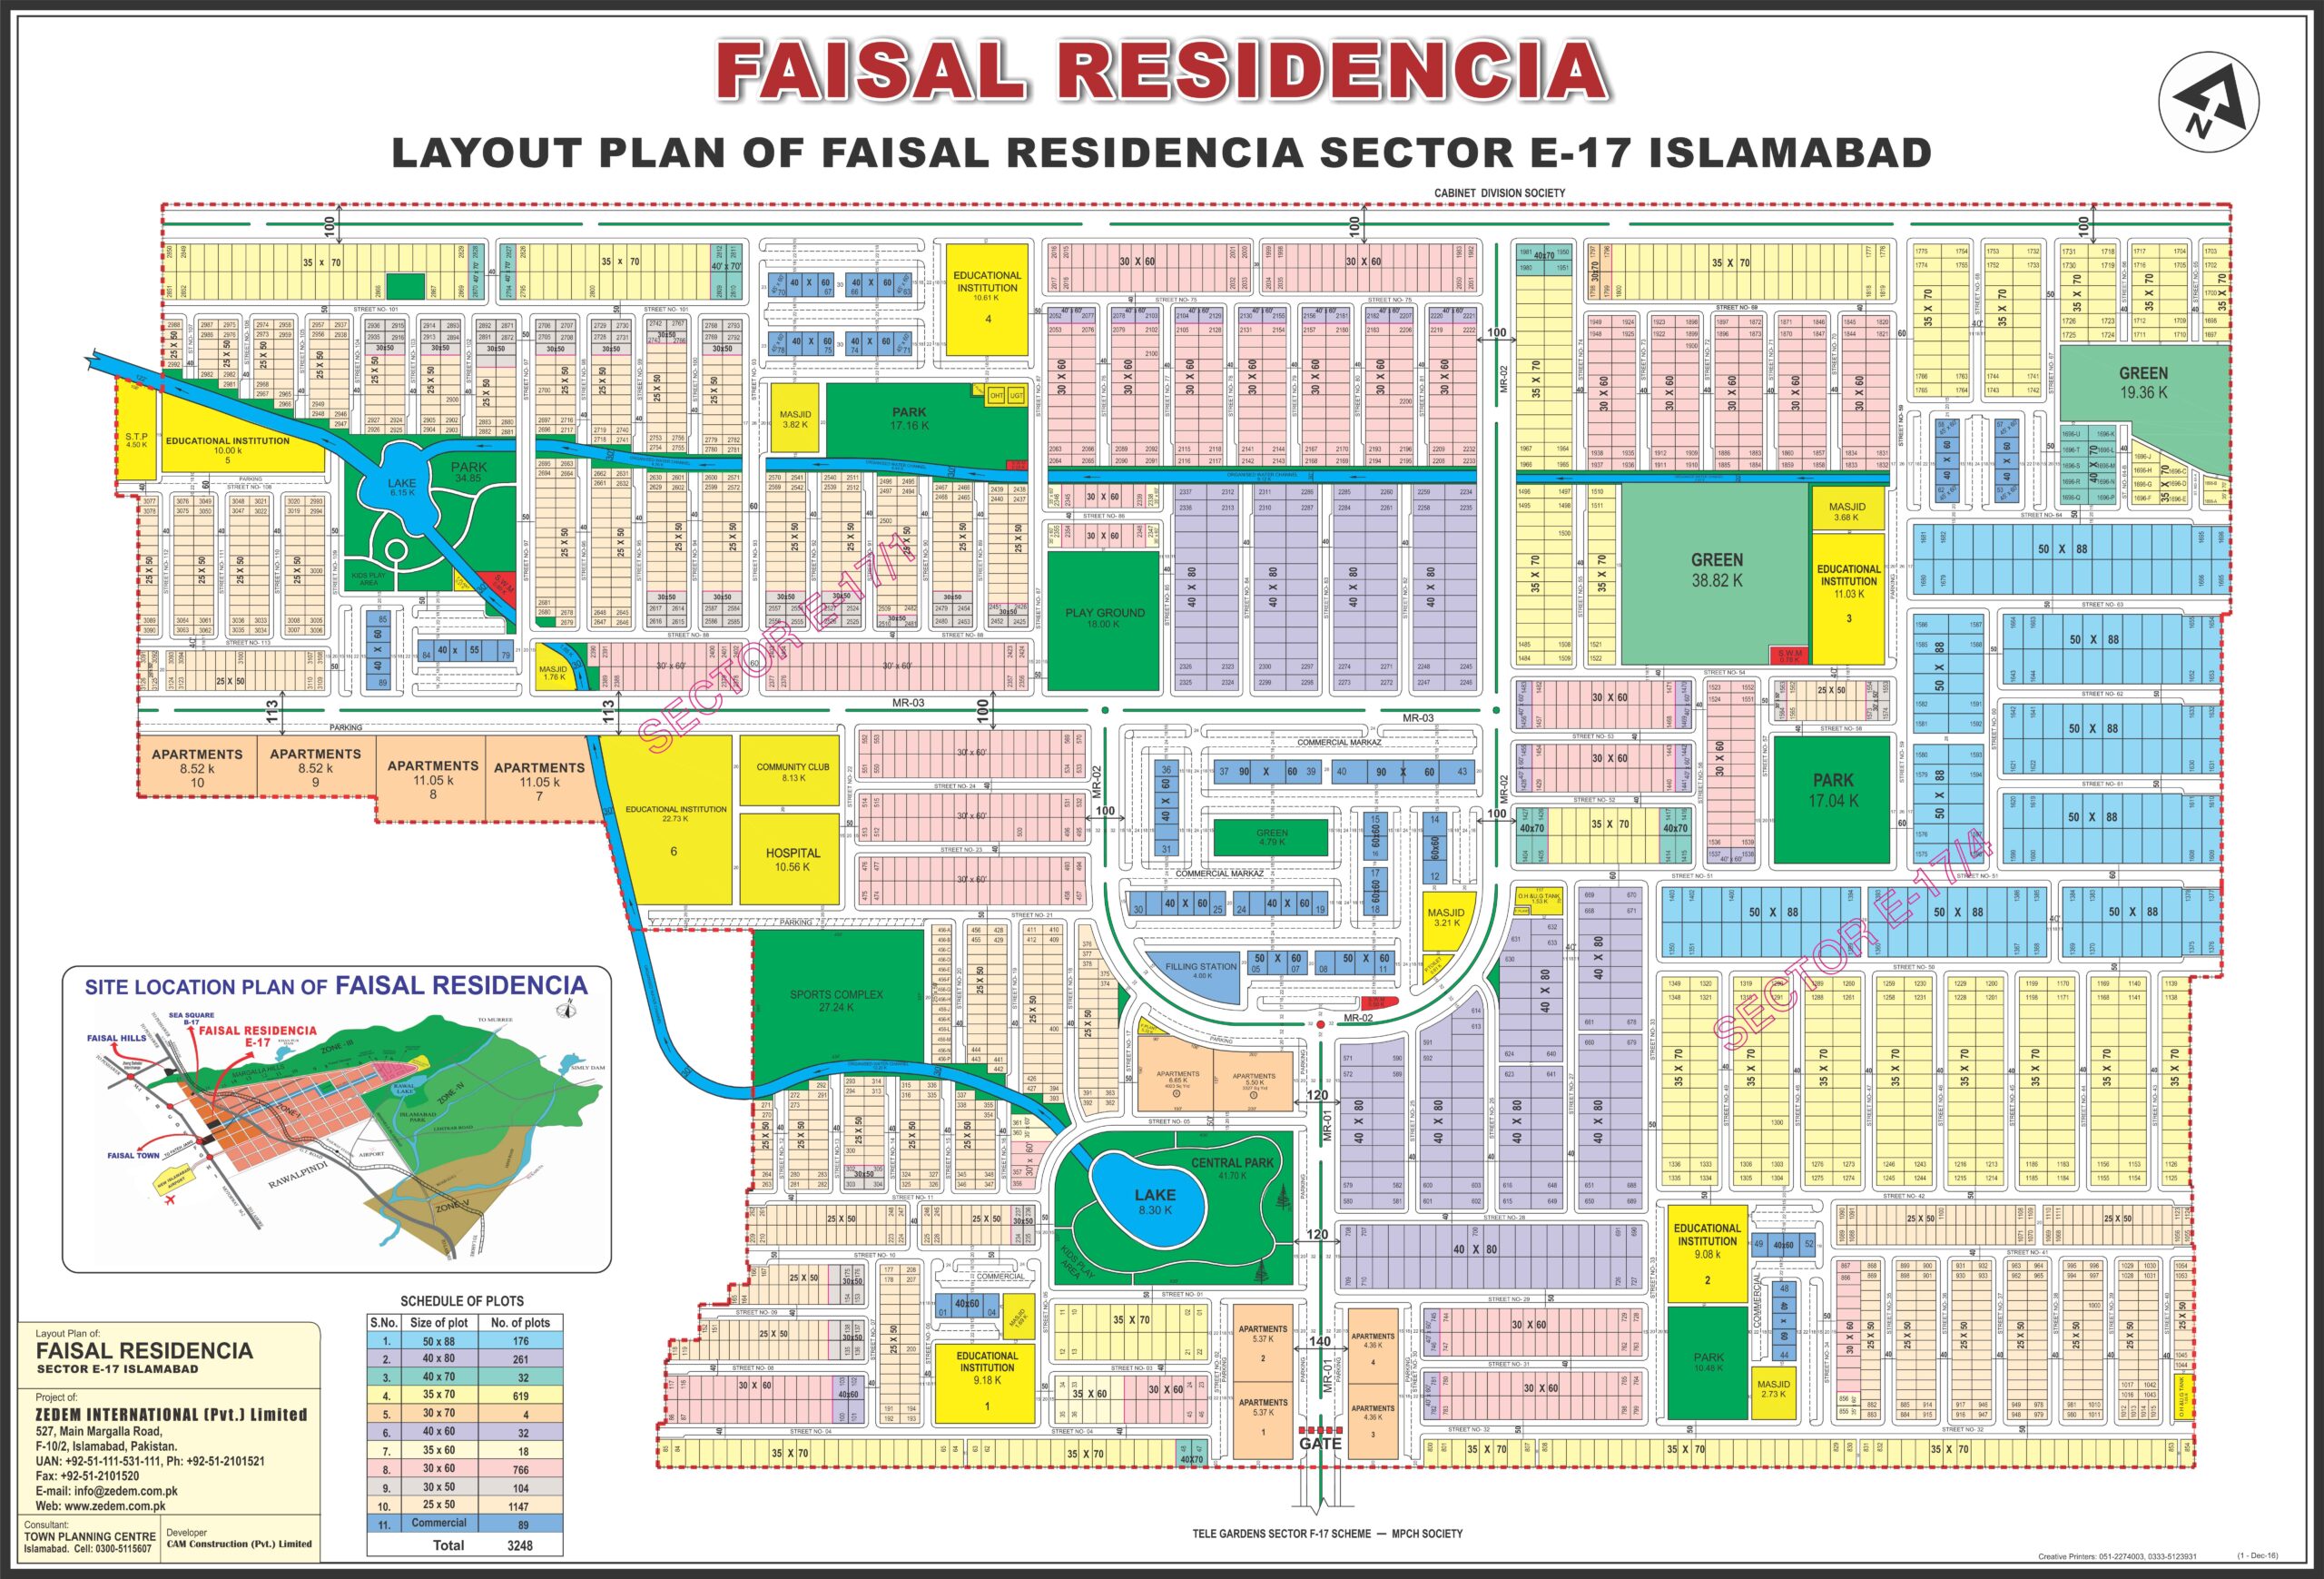 Faisal Residencia E-17 Islamabad Layout Plan